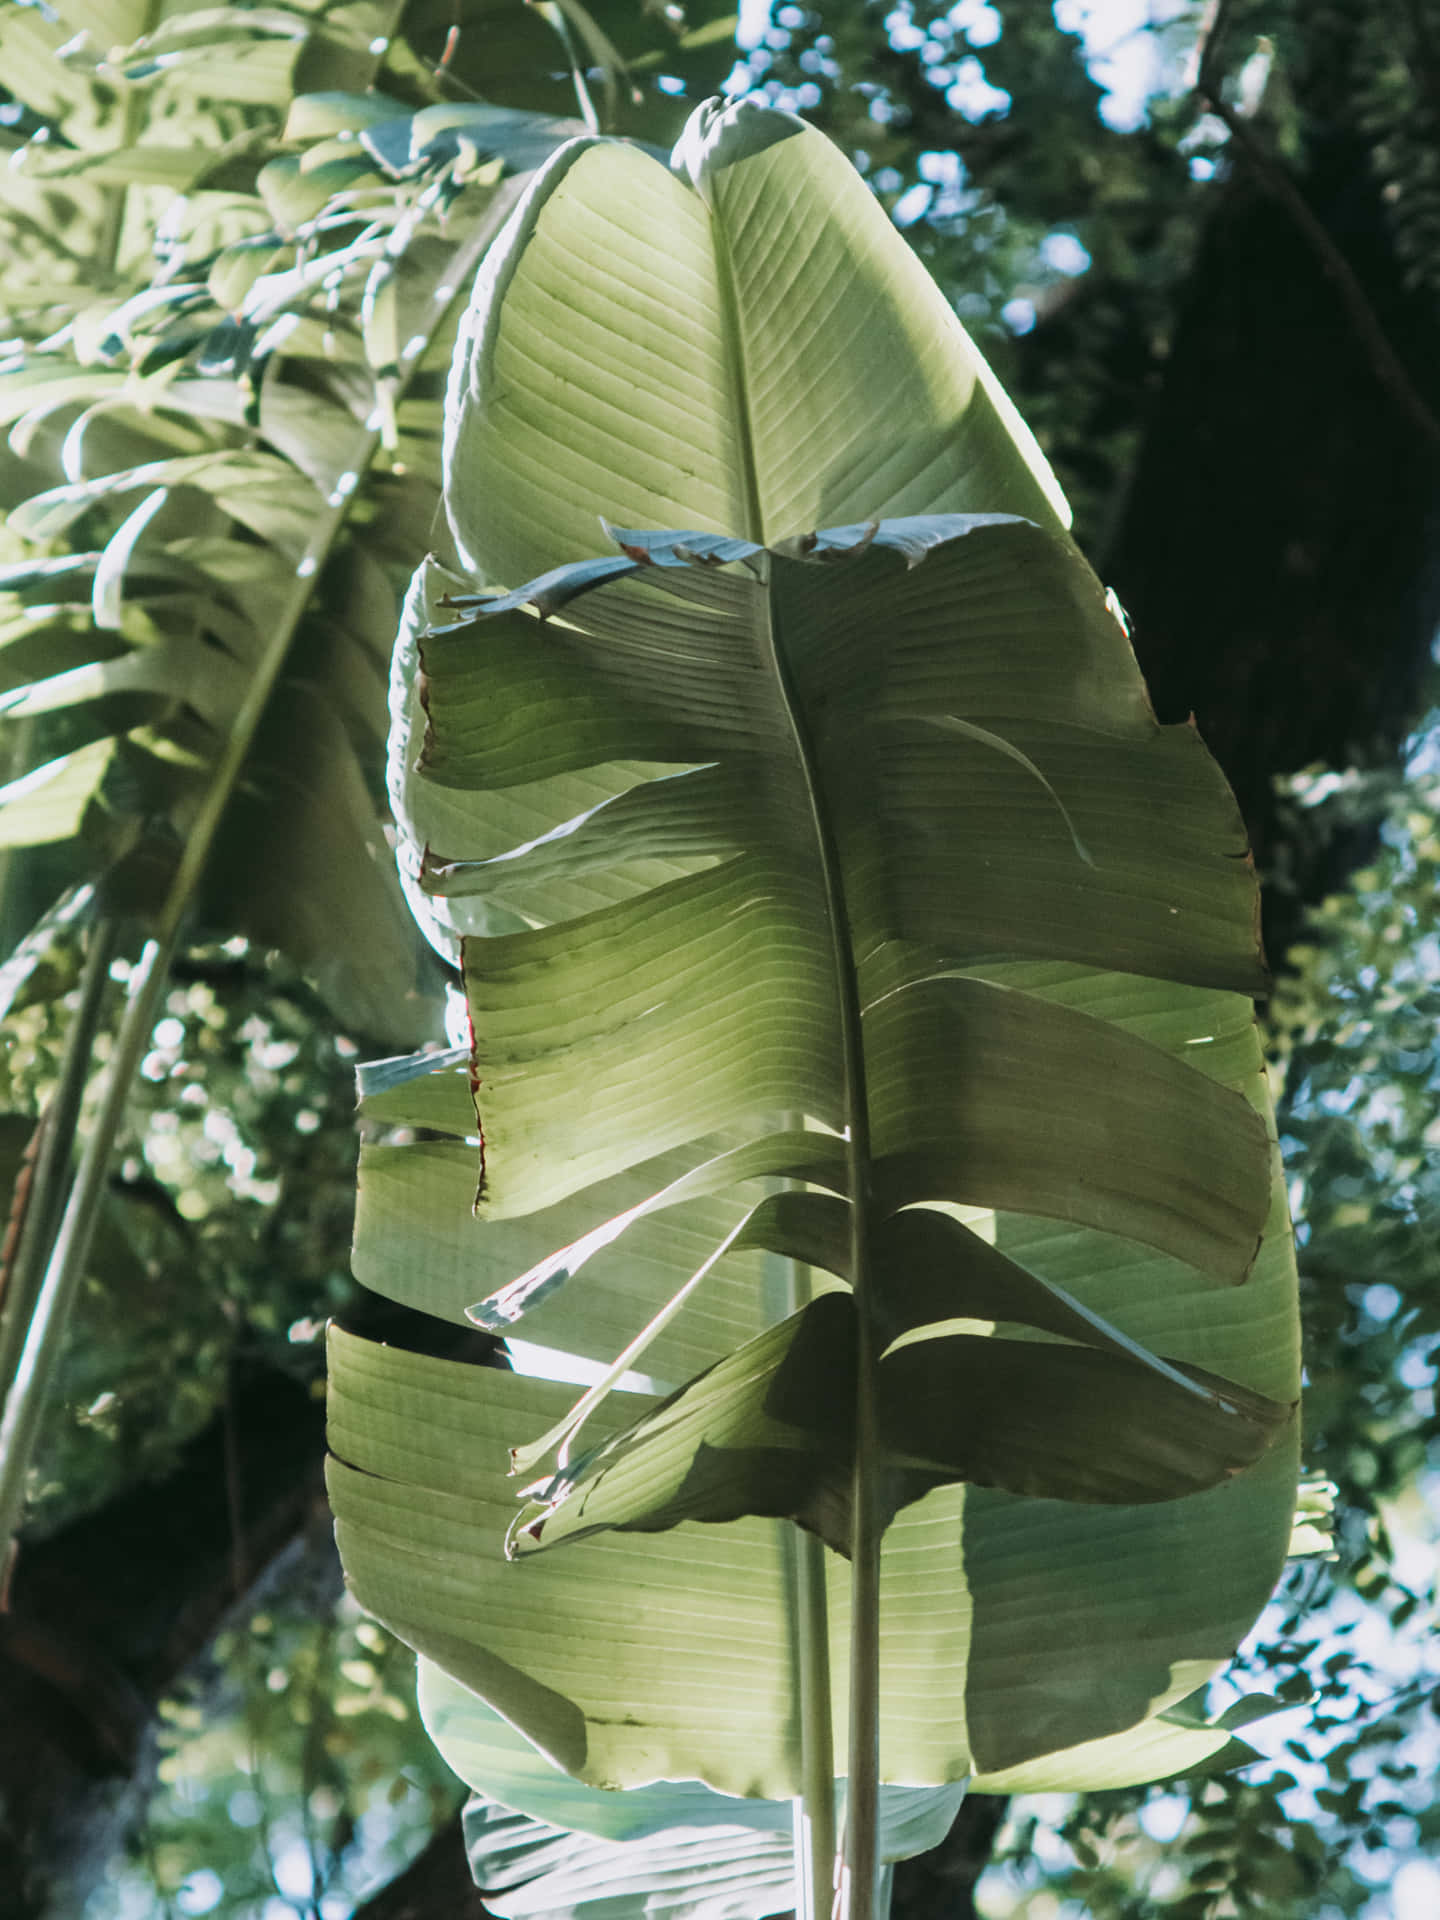 A close-up of a tropical banana leaf.